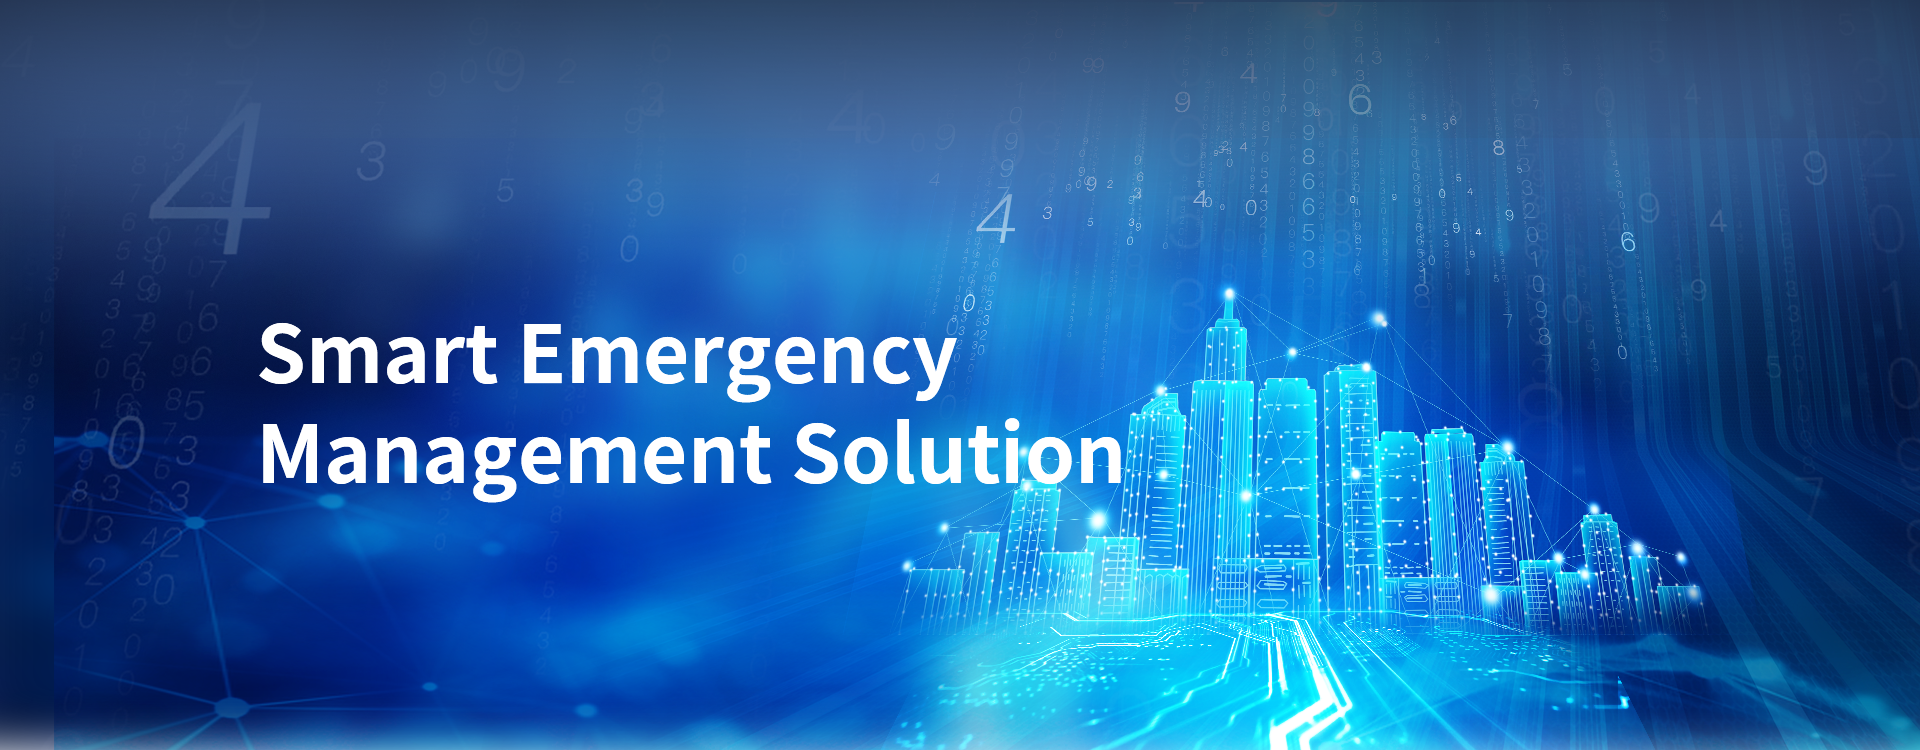 Smart Emergency Management